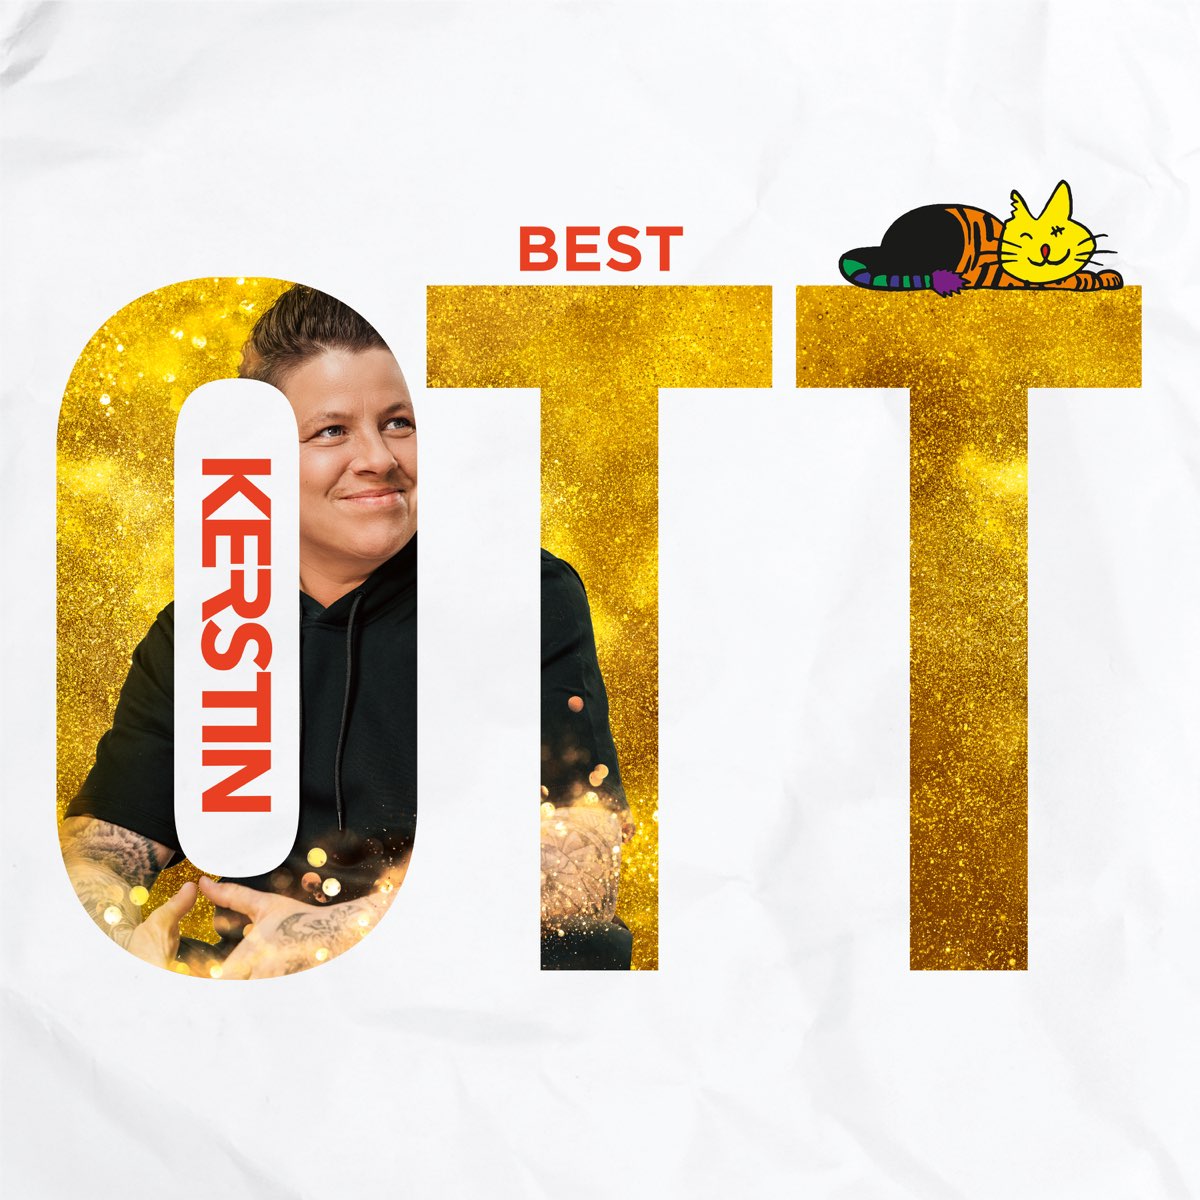 Best OTT by Kerstin Ott on Apple Music